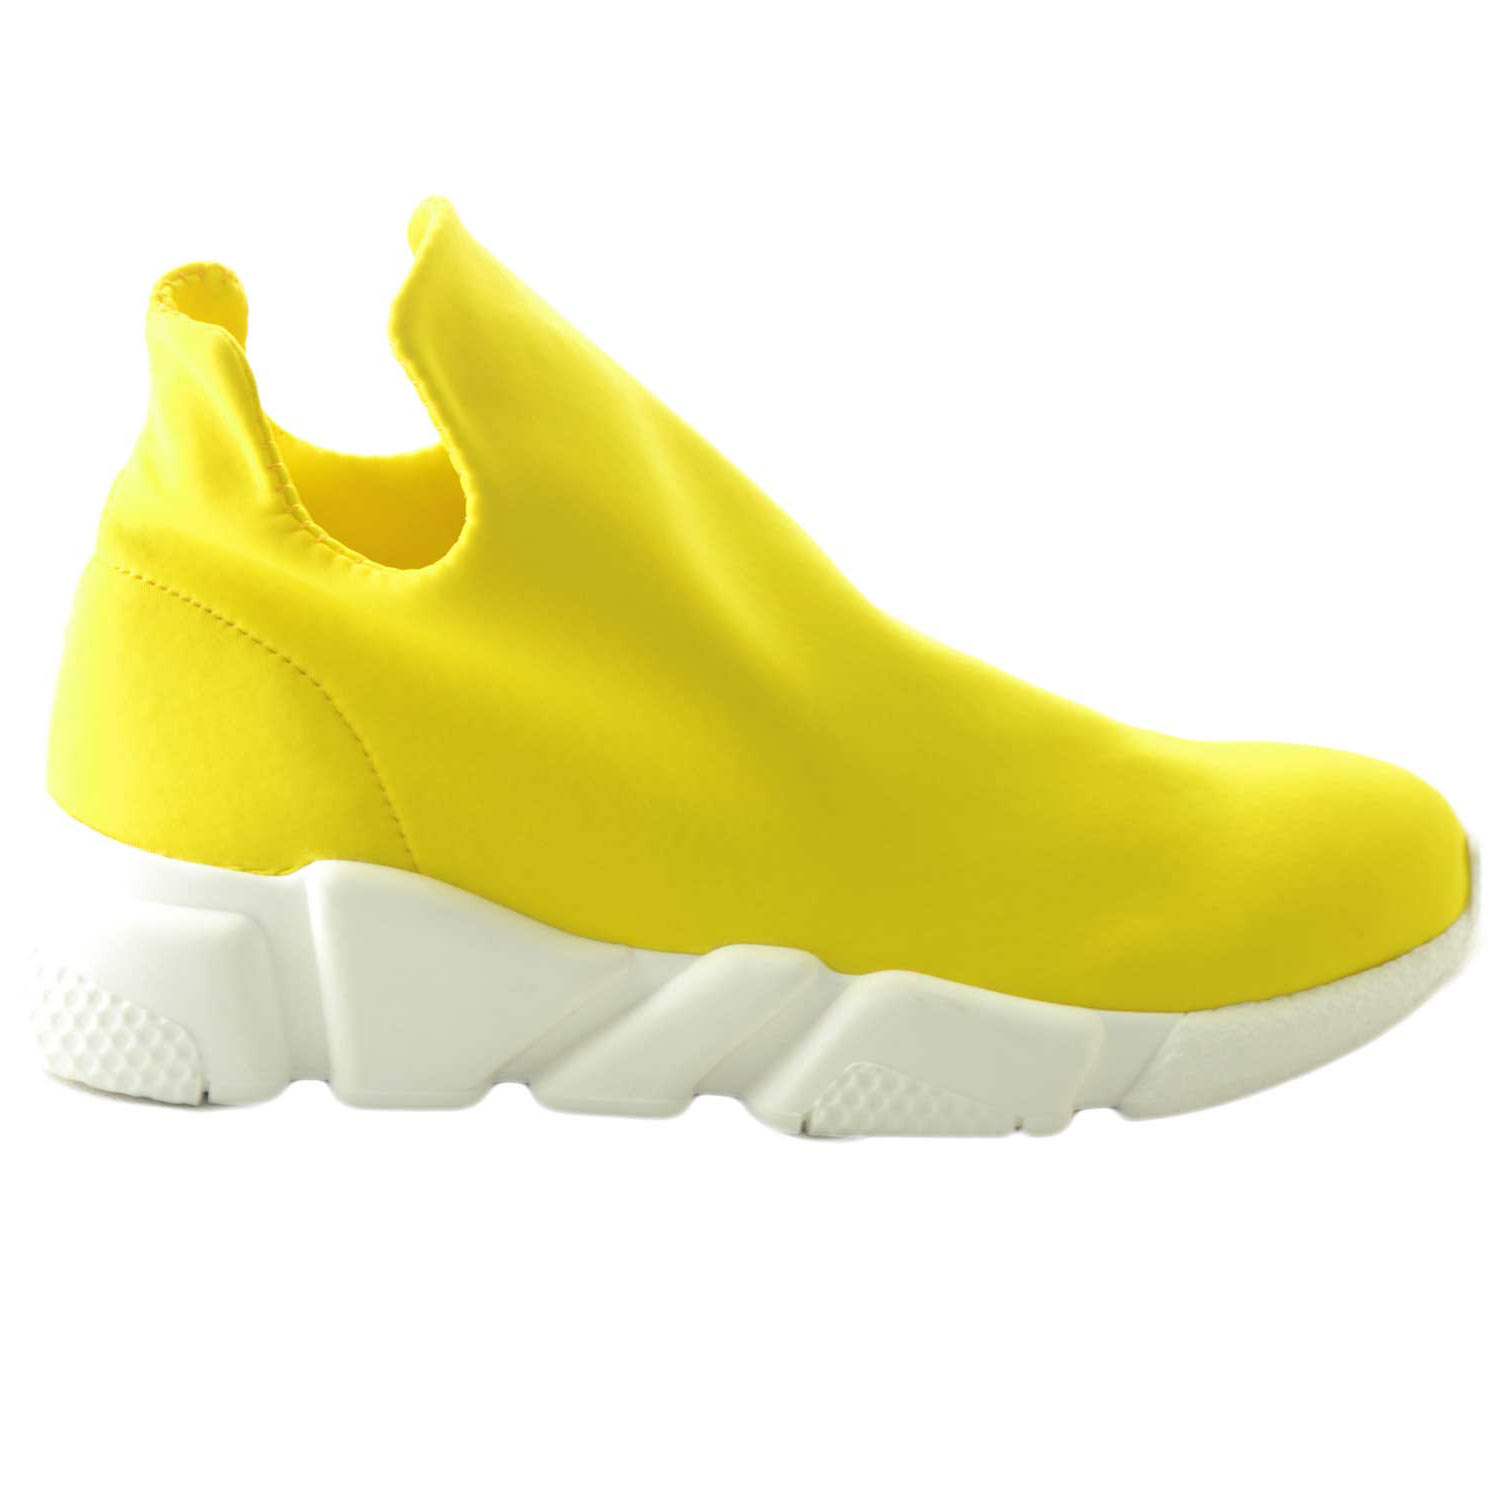 Scarpe uomo sneakers bassa calzino tessuto lycra giallo made in italy fondo antiscivolo man casual moda giovanile.